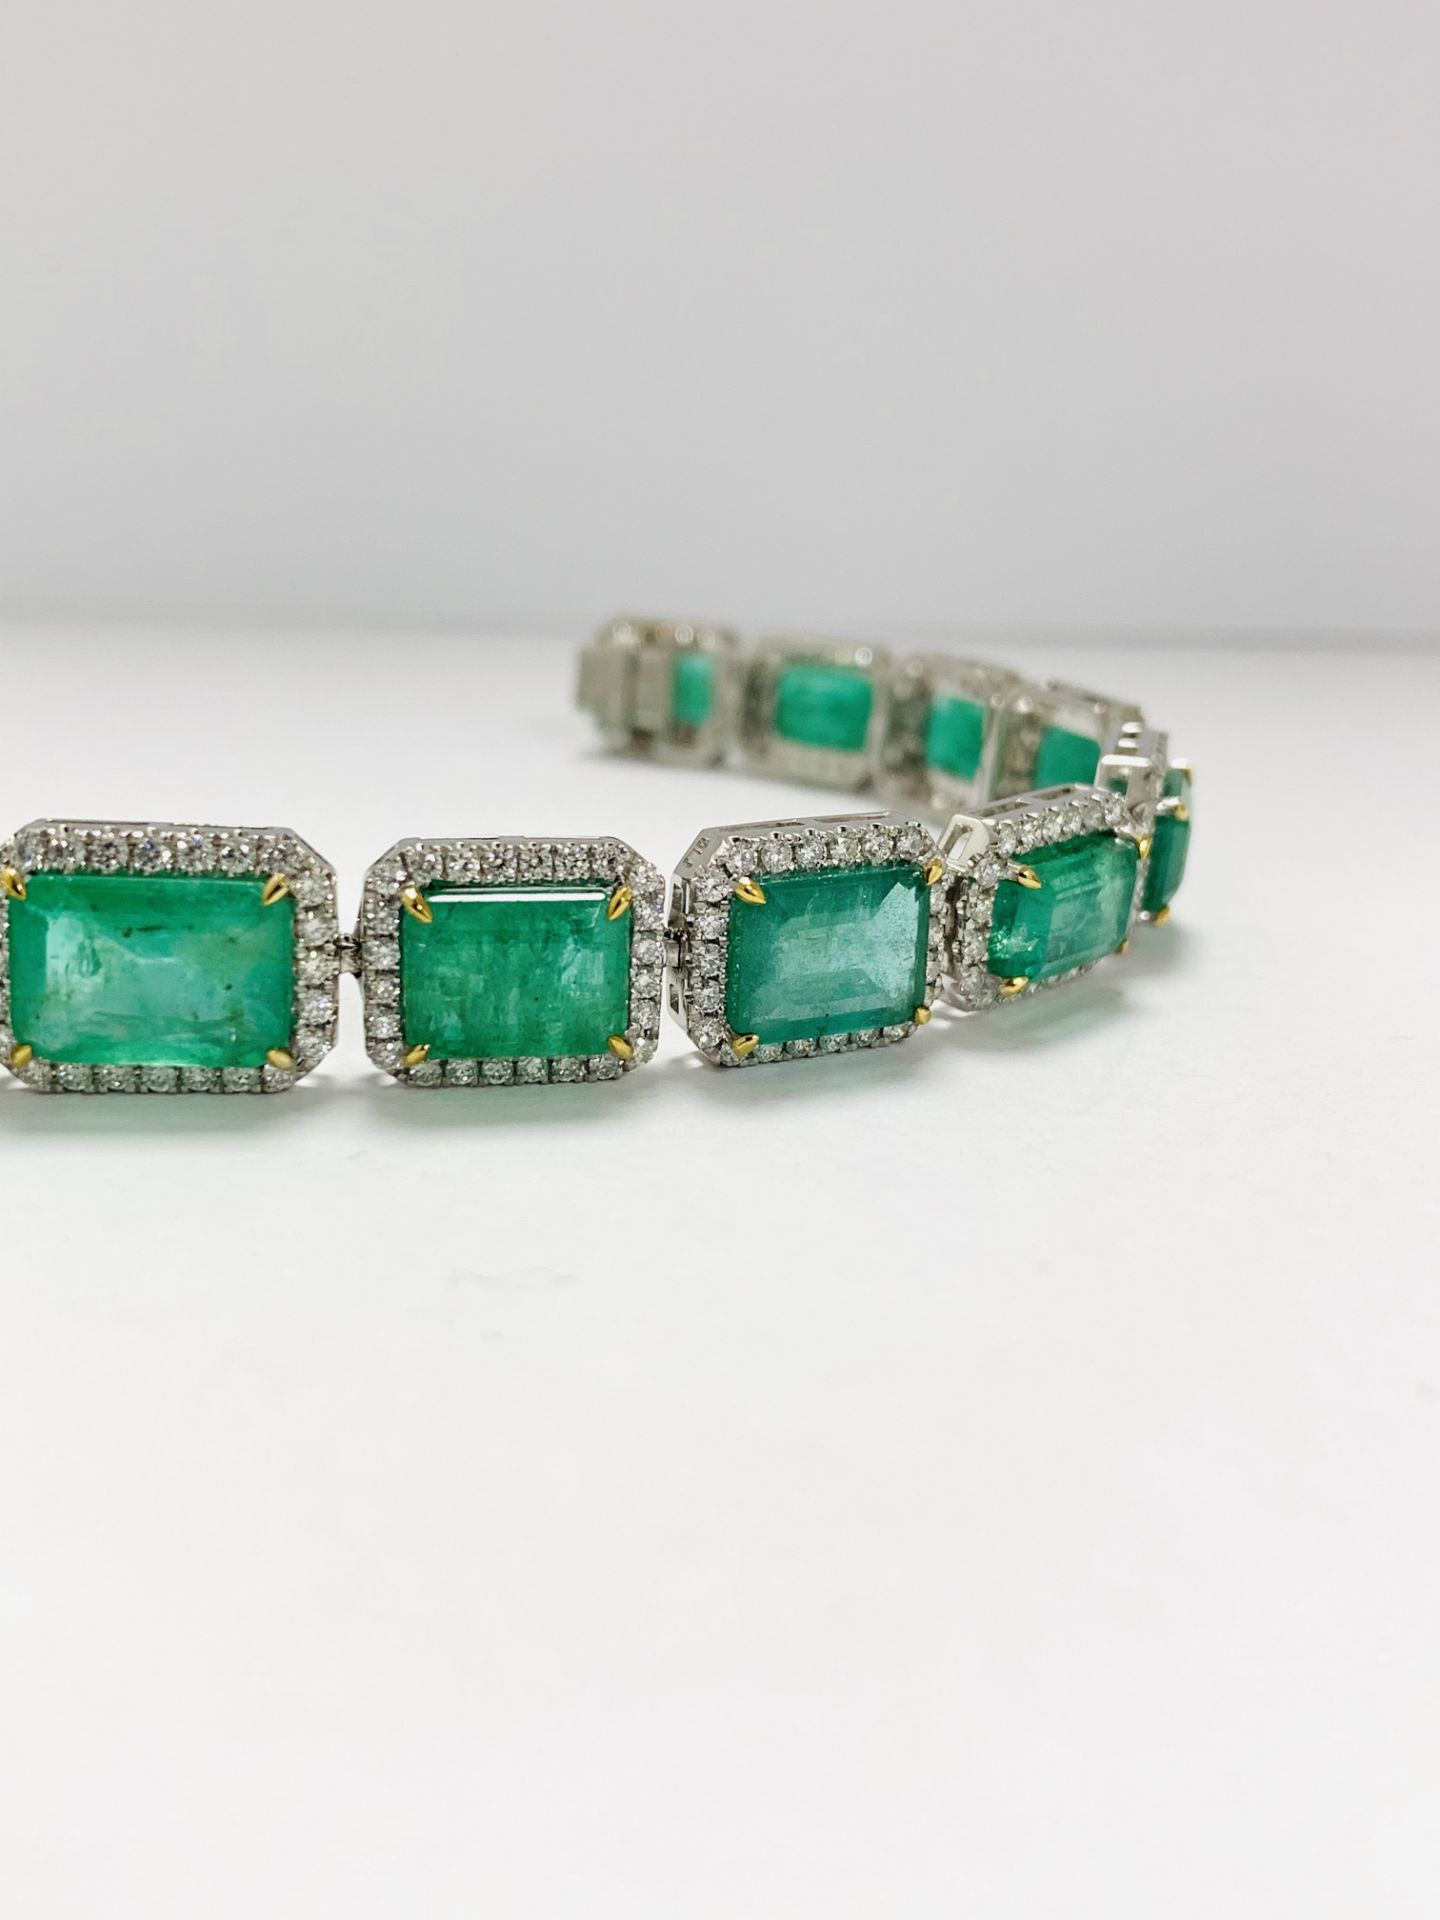 Platinum Emerald and Diamond Necklace - Image 6 of 18